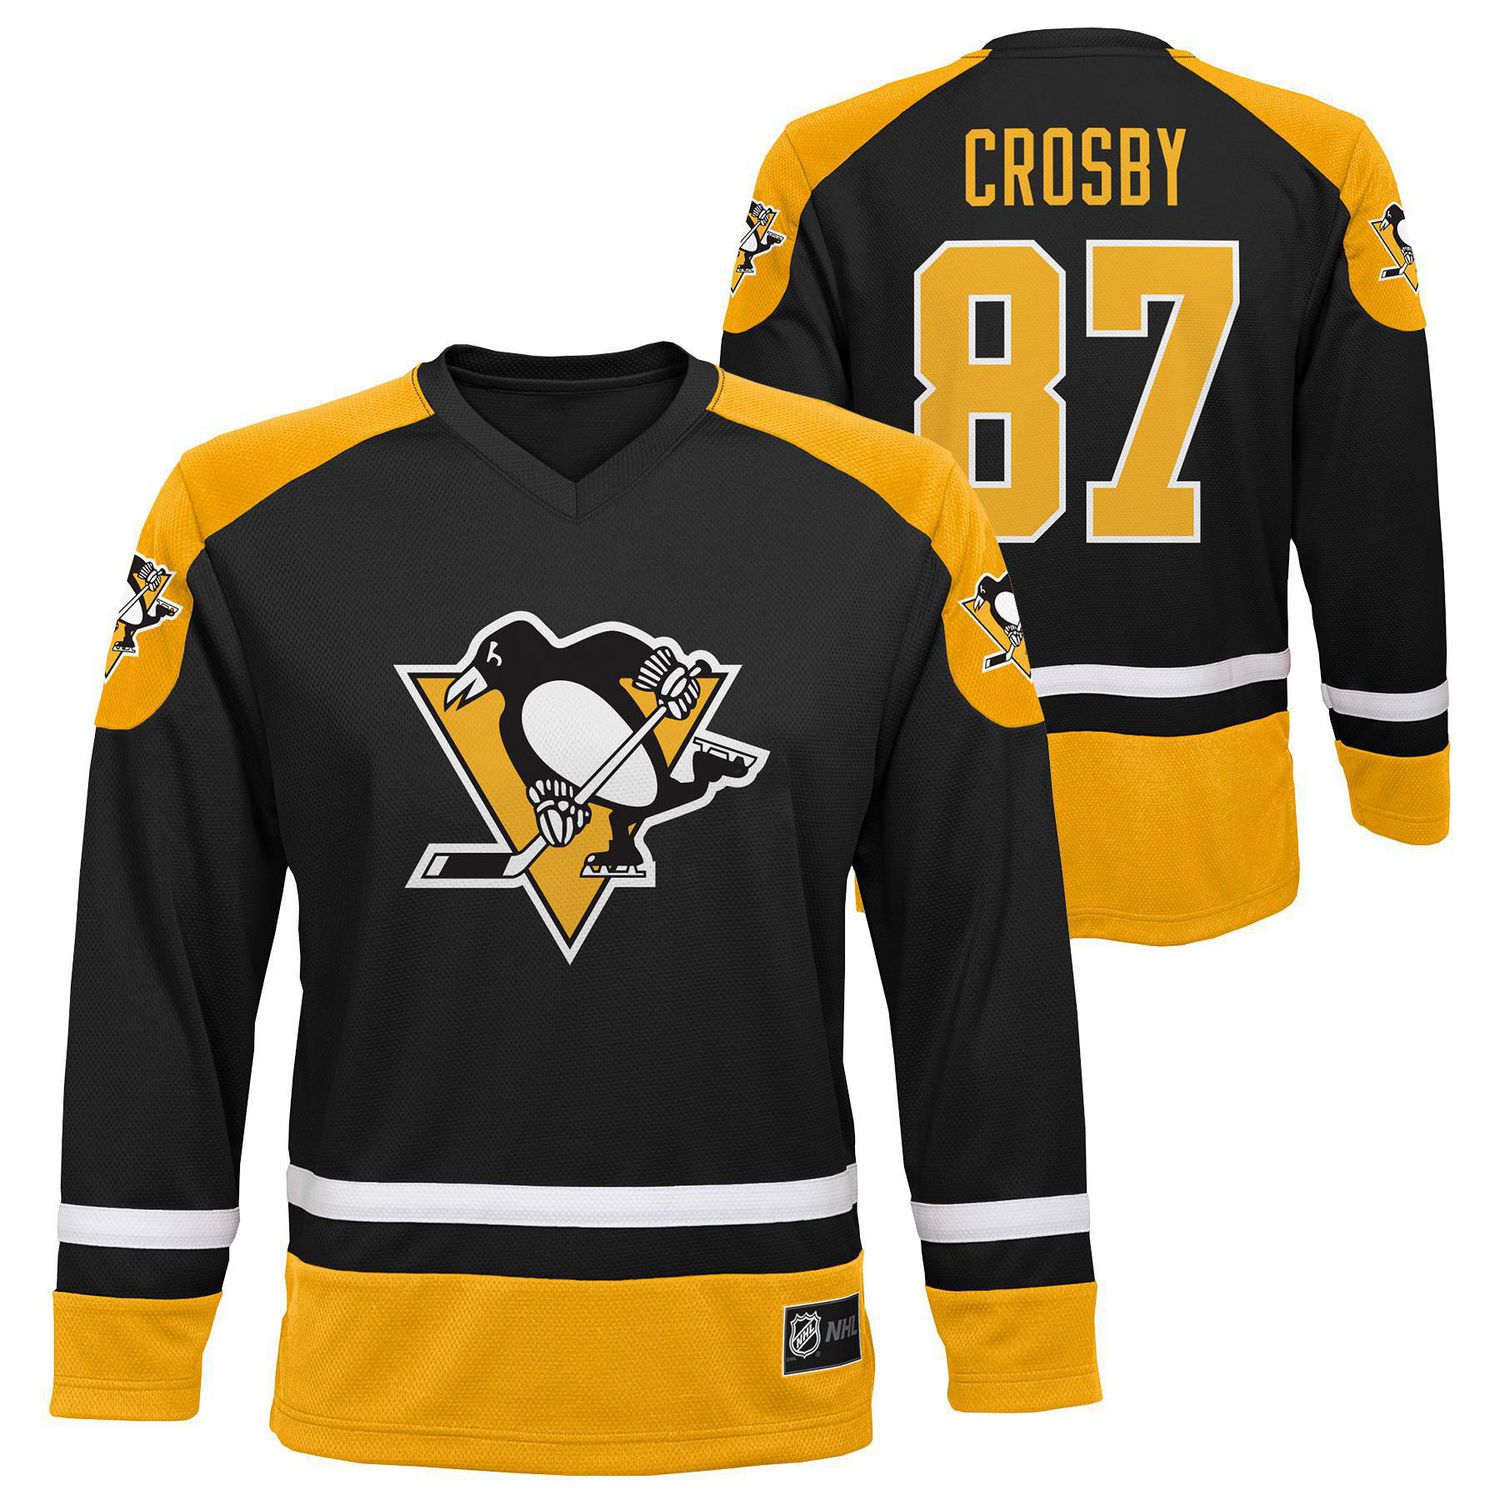 Джерси питтсбург пингвинз. Джерси Кросби. Sidney Crosby Jersey. "Pittsburgh Penguins детская одежда.